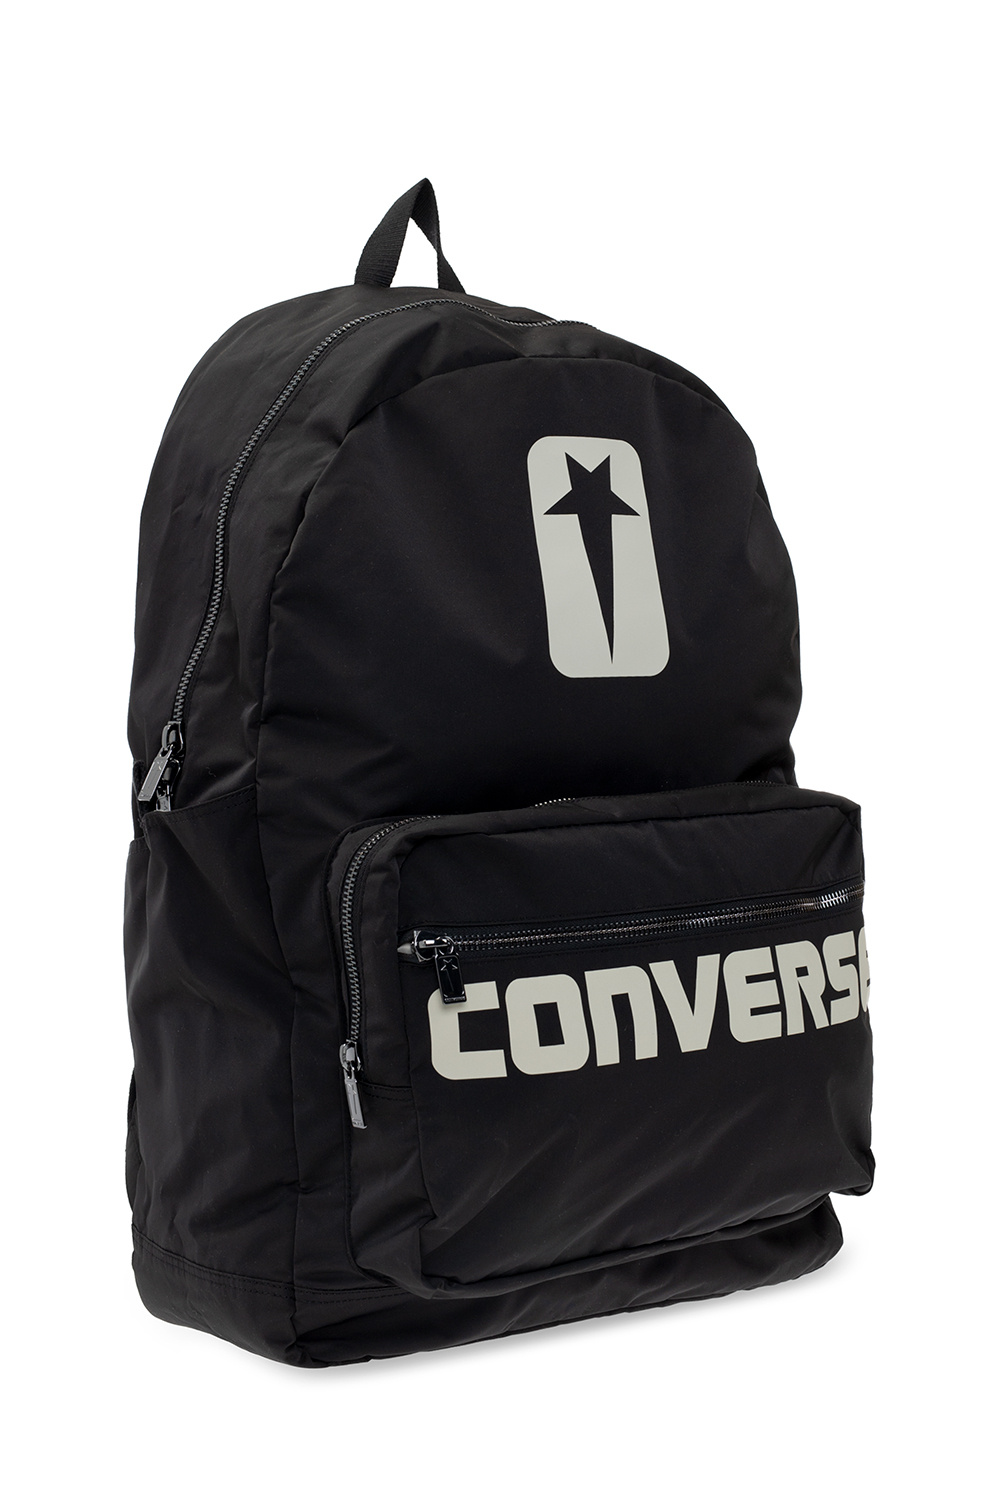 Converse Converse x DRKSHDW